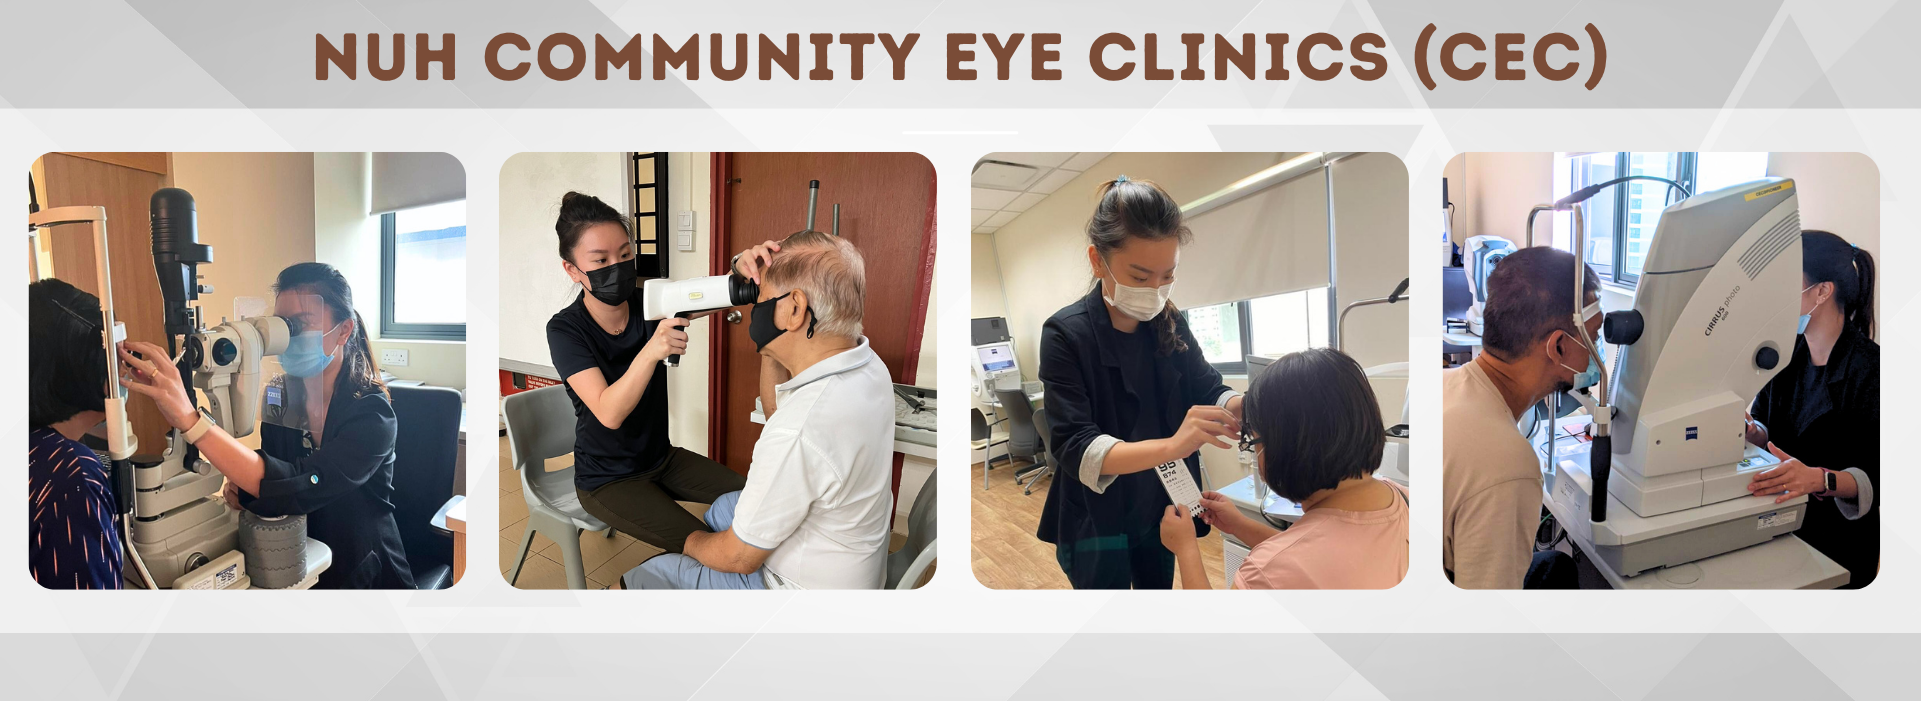 Community Eye Clinics